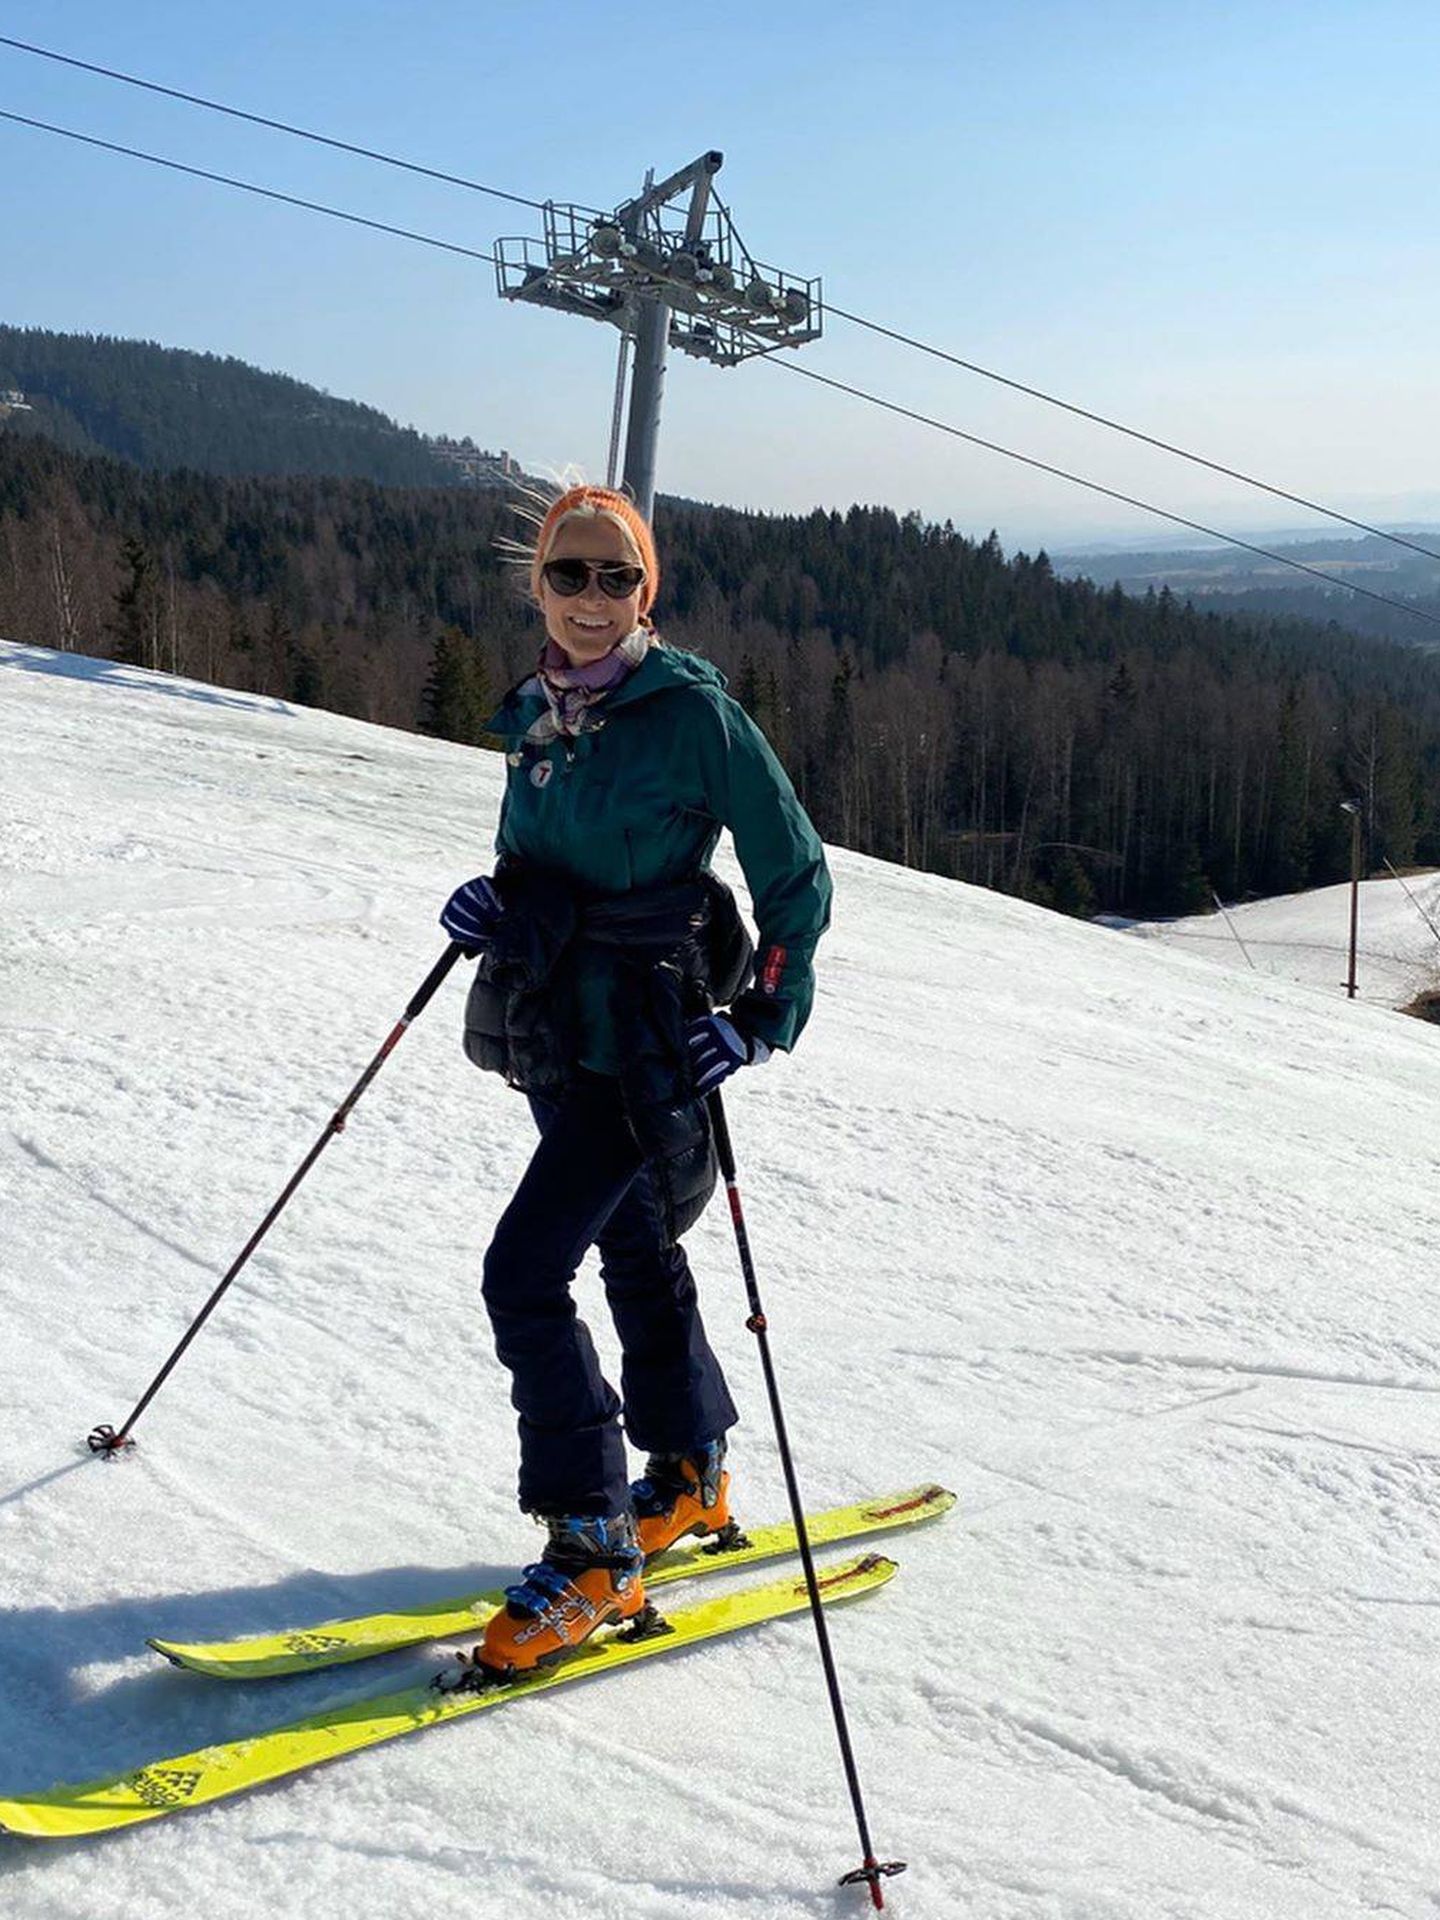 Mette-Marit, practicando esquí. (Instagram @crownprincessmm)